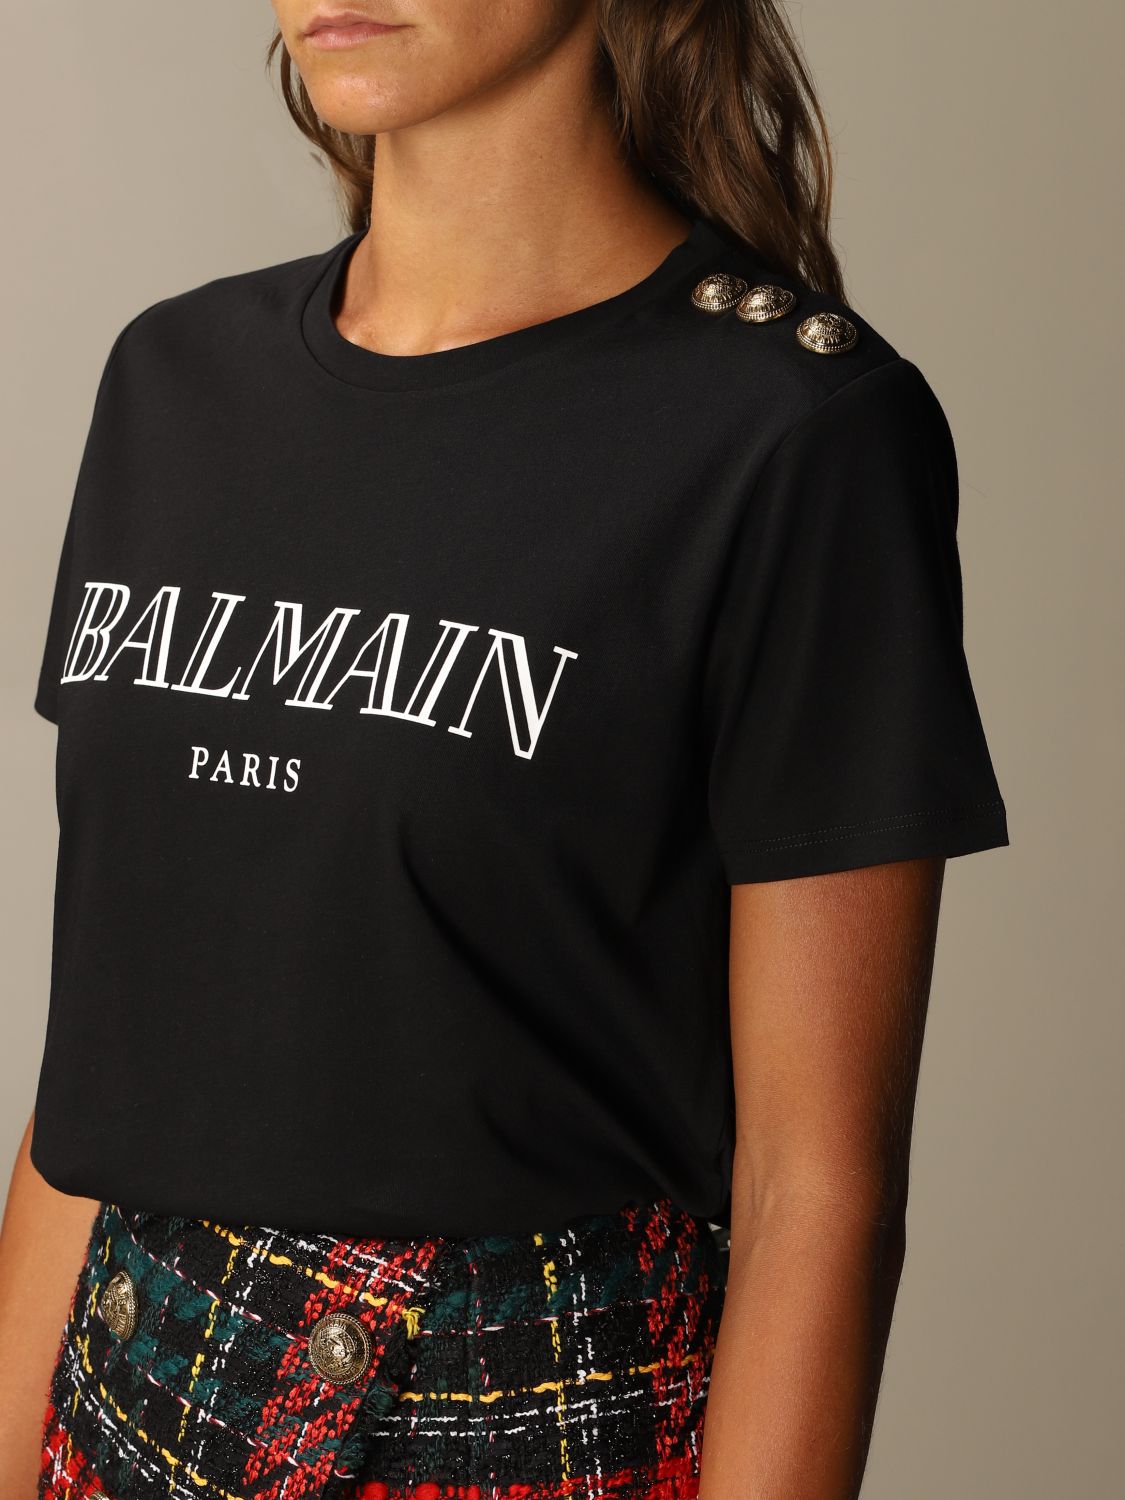 Buy > tee shirt balmain femme > in stock